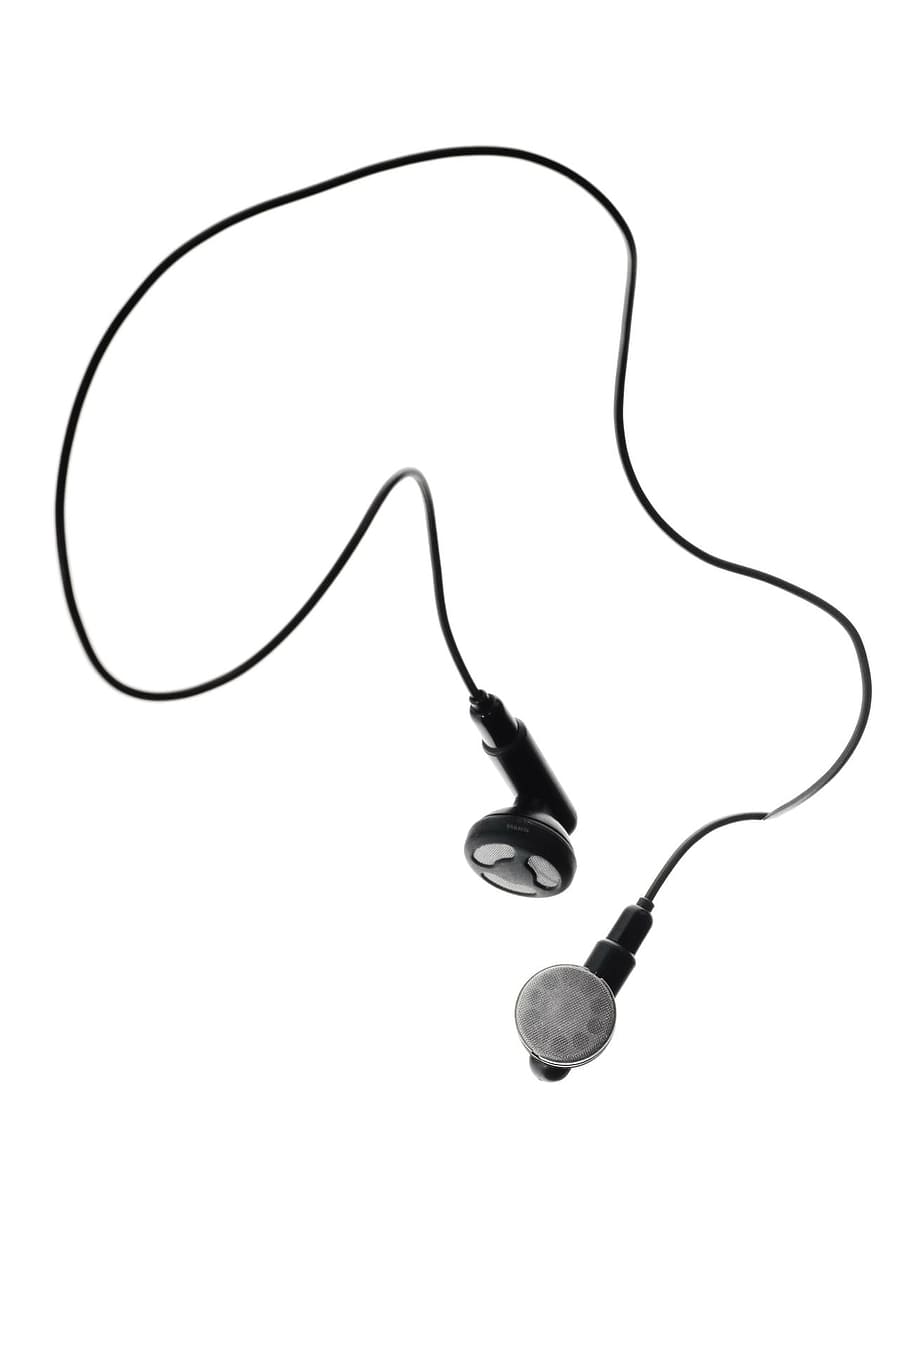 audio, cable, close-up, ear-bud, earbud, earphones, electronics, HD wallpaper